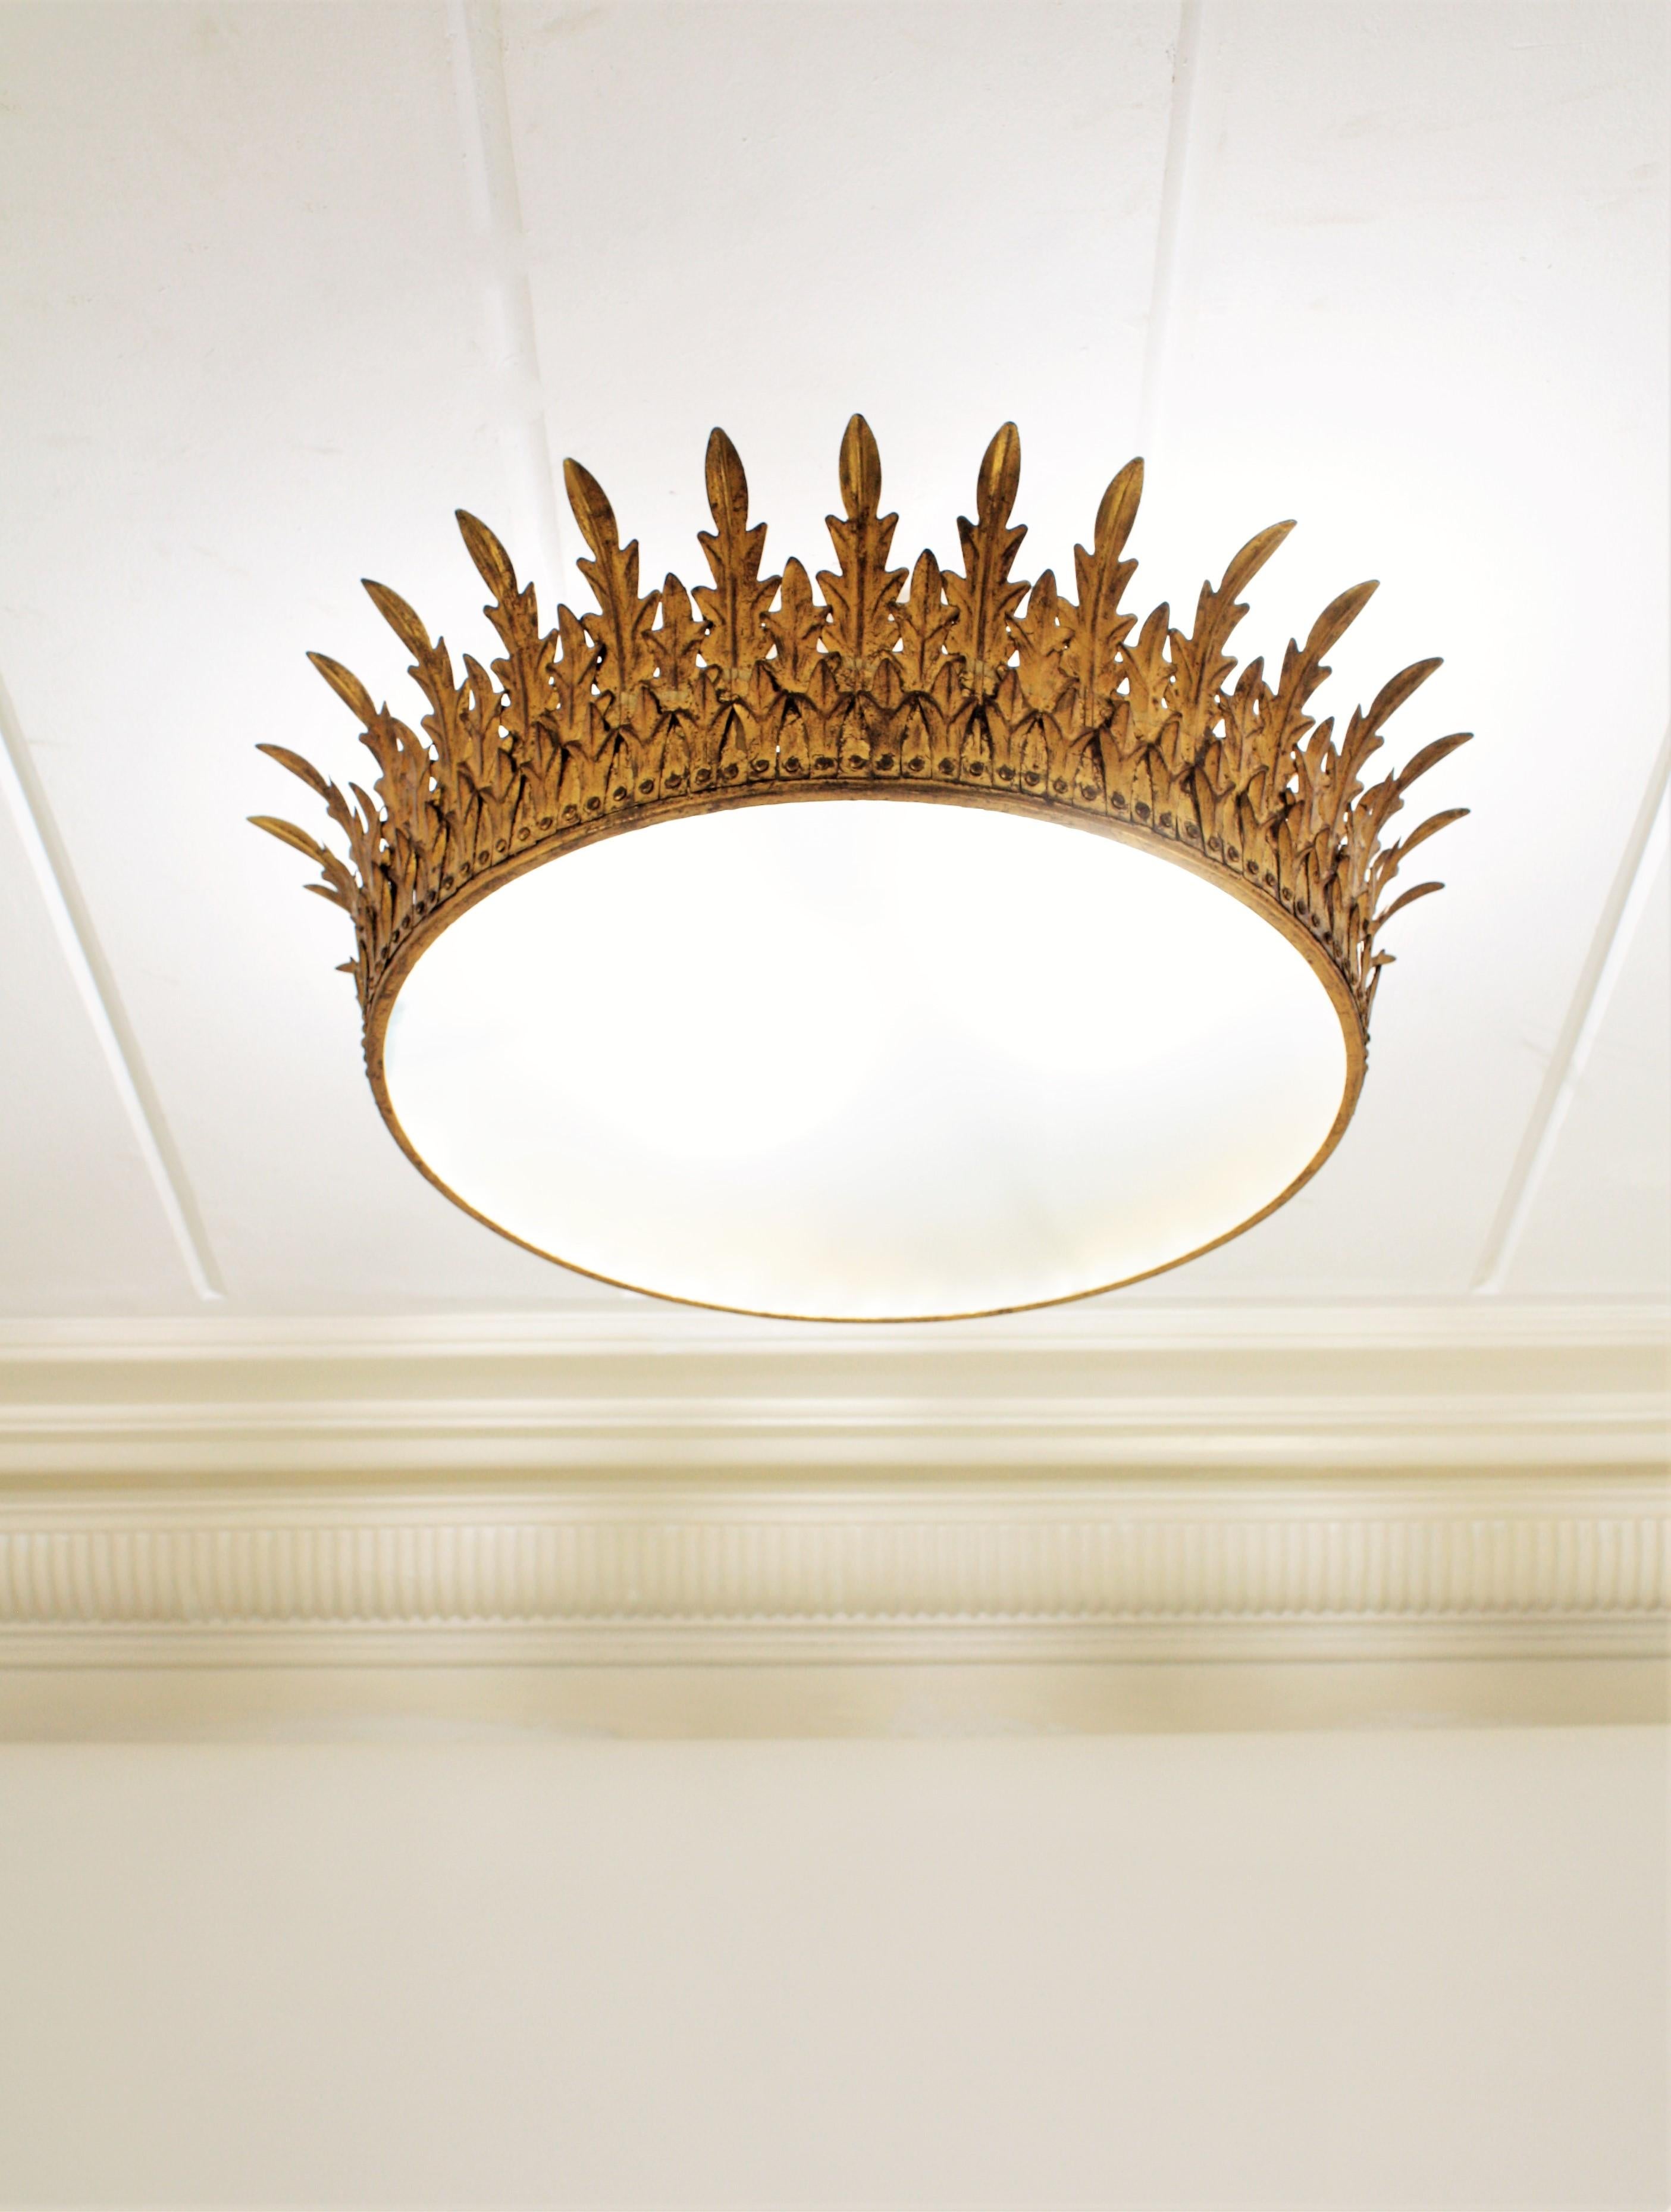 Metal Spanish Extra Large Neoclassical Gilt Iron Sunburst Crown Ceiling Light Fixture